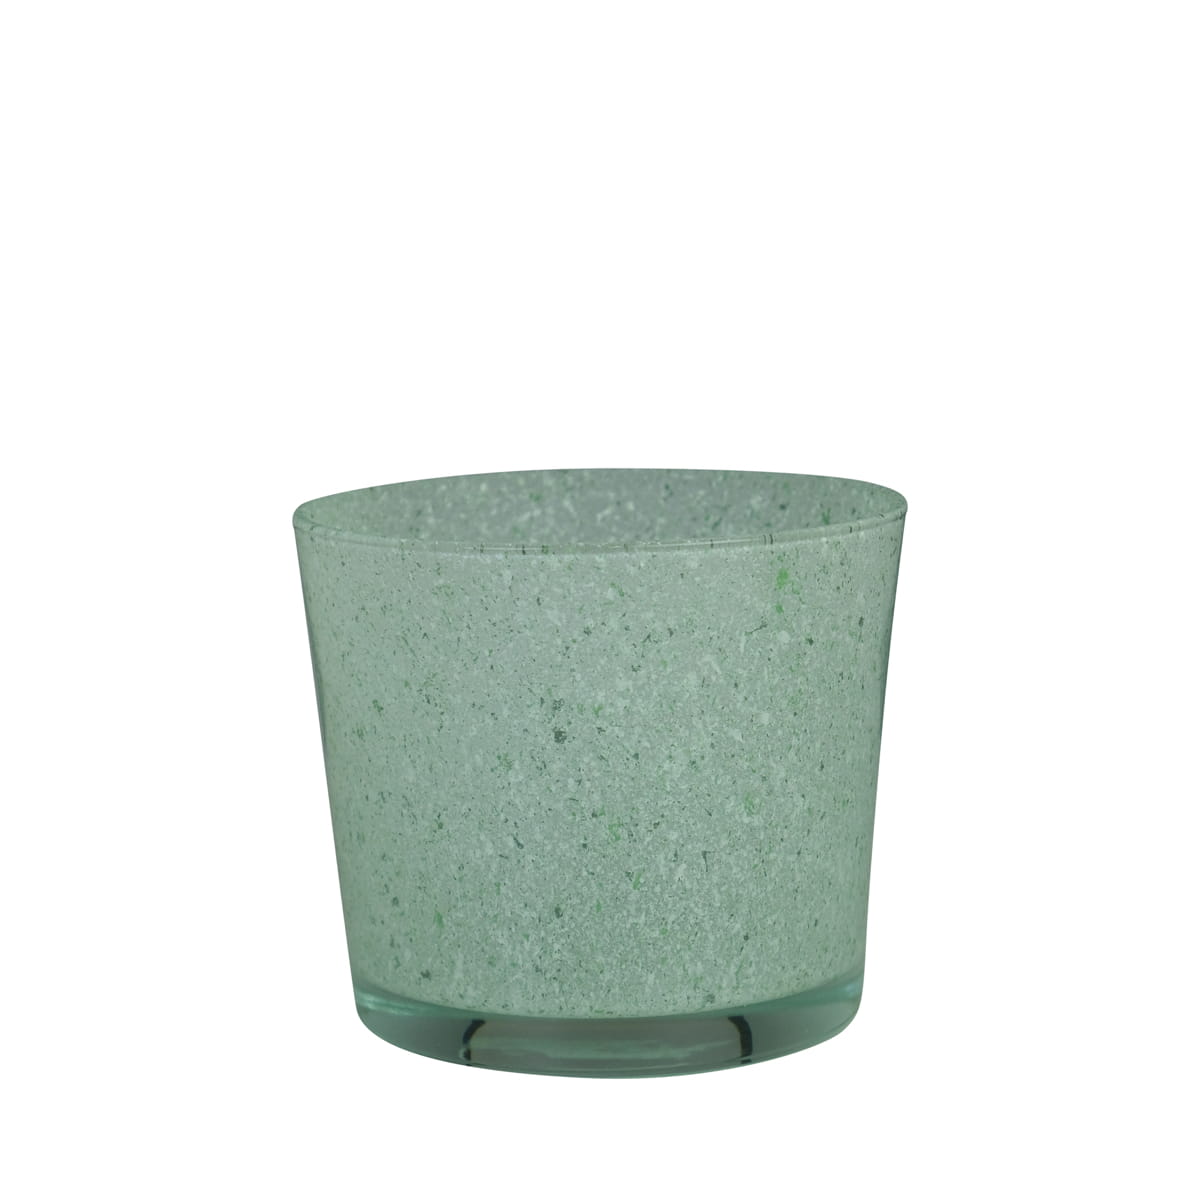 Mars & More Glas Blumentopf Conner Granite grün  Ø 11,5 cm